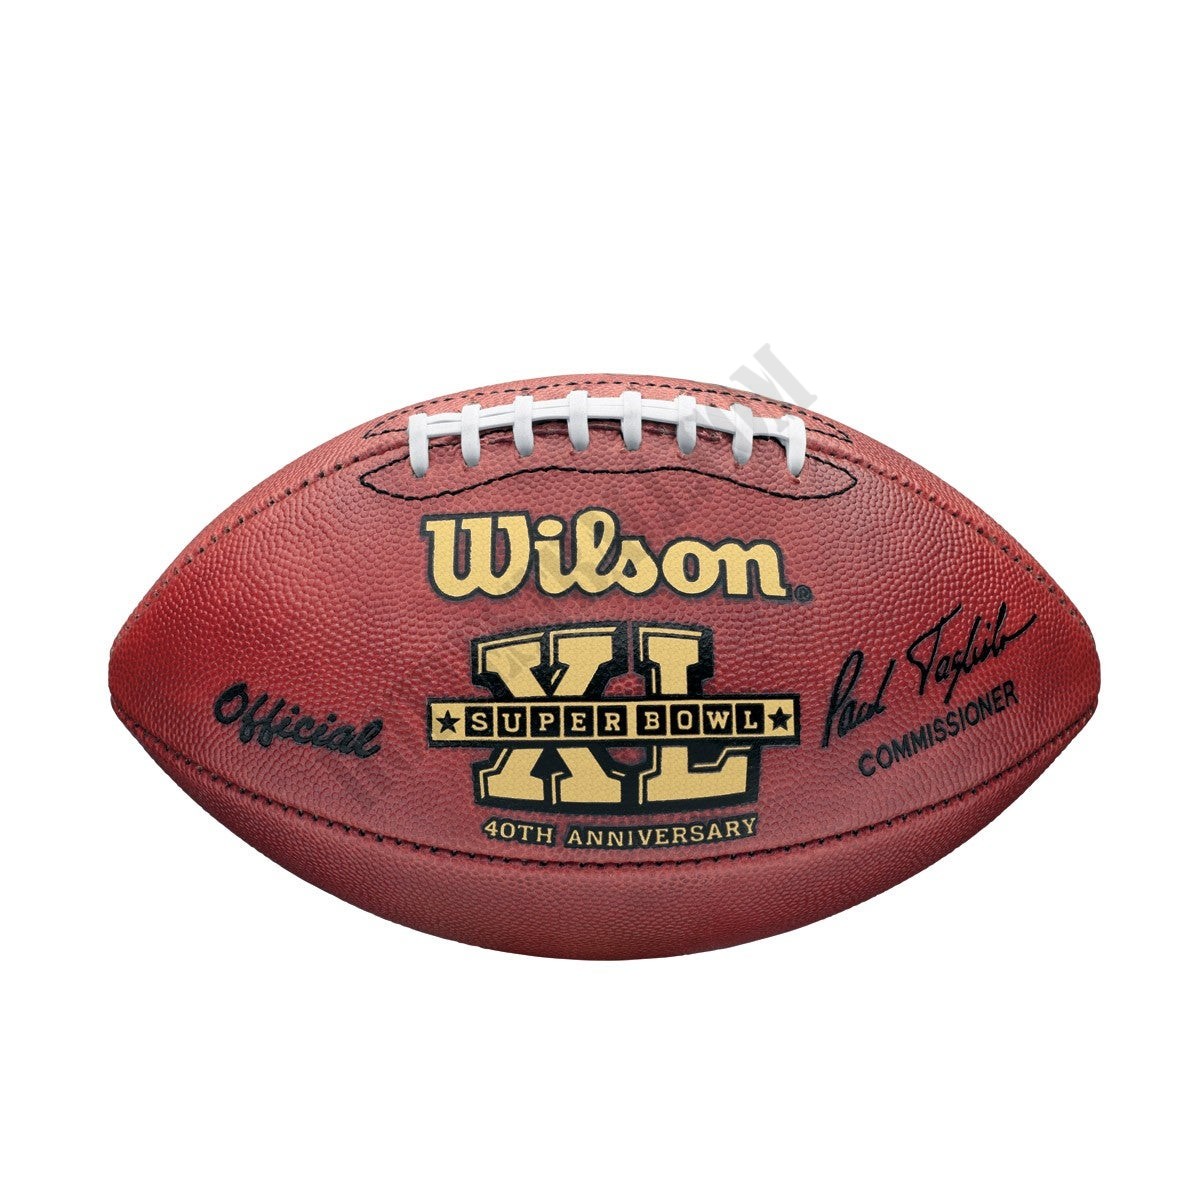 Super Bowl XL Game Football - Pittsburgh Steelers ● Wilson Promotions - Super Bowl XL Game Football - Pittsburgh Steelers ● Wilson Promotions